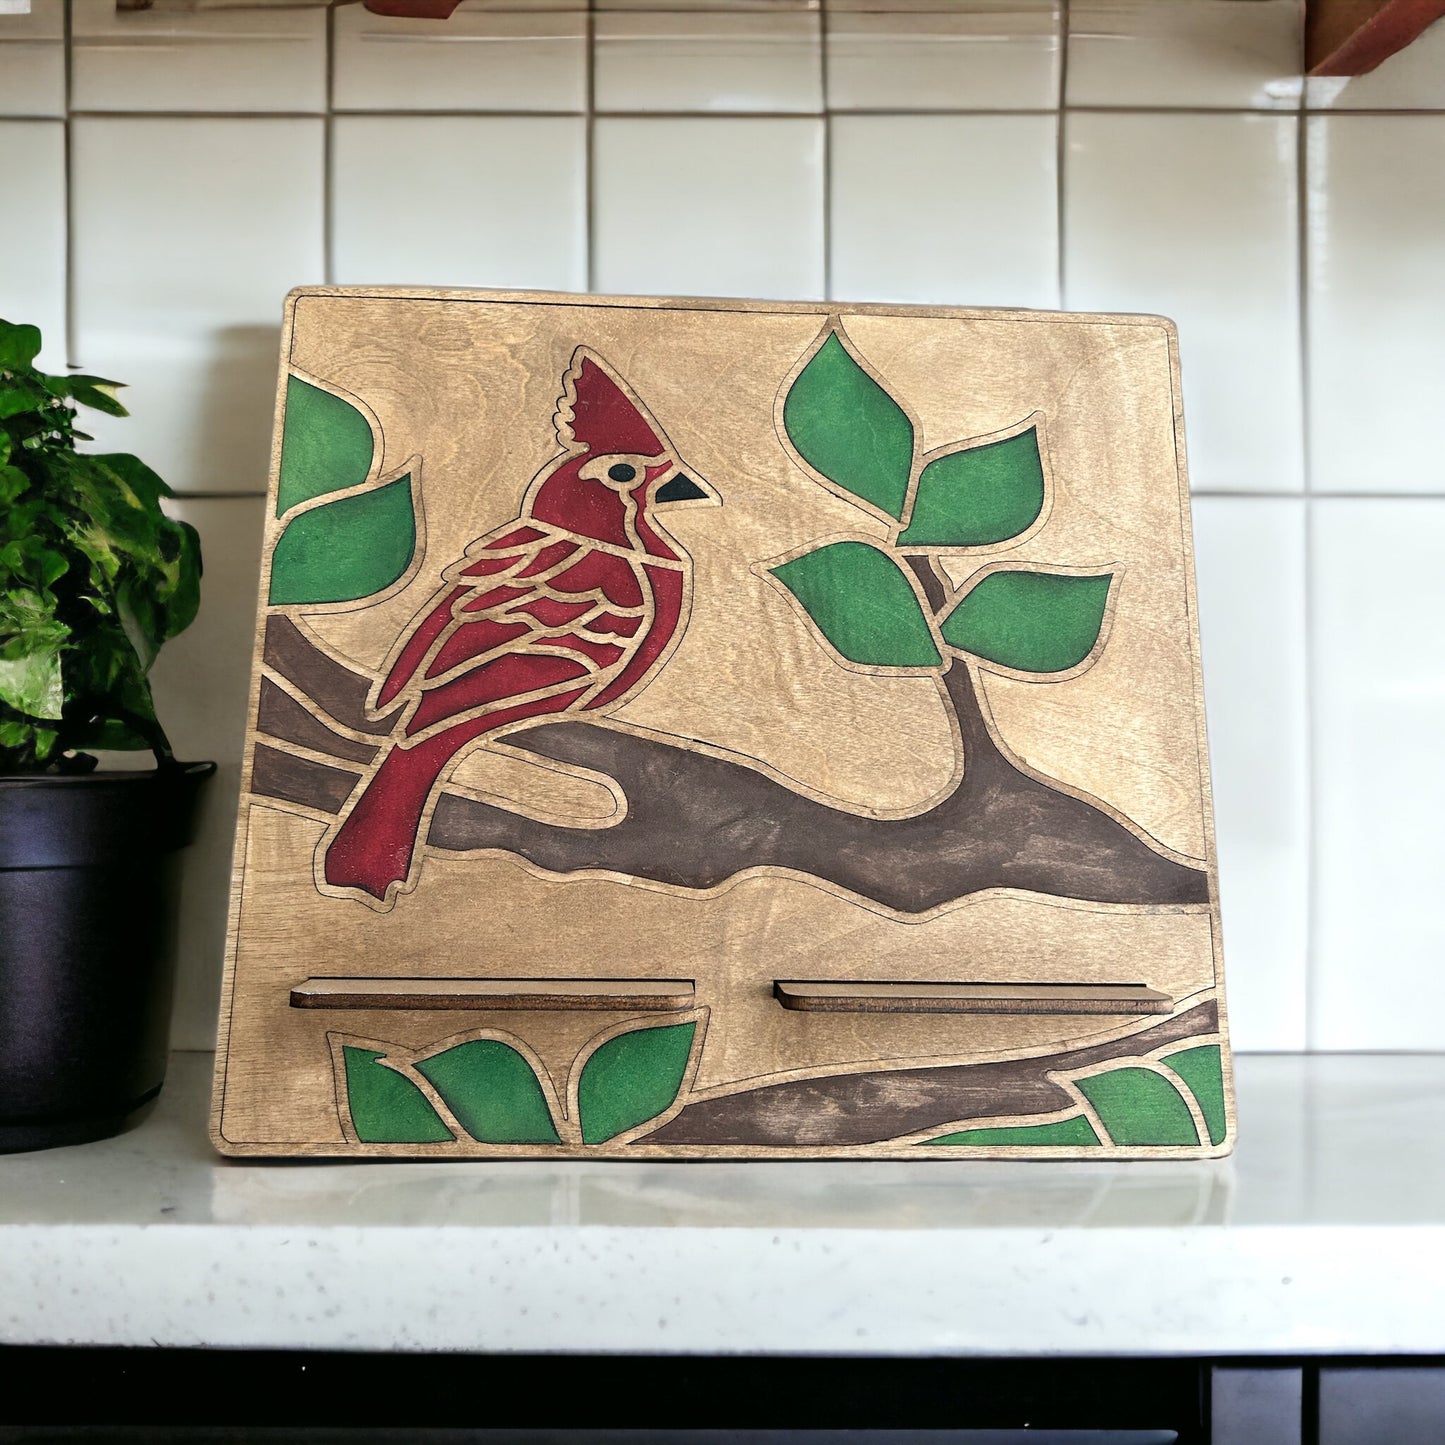 wood cardinal iPad/cookbook stand